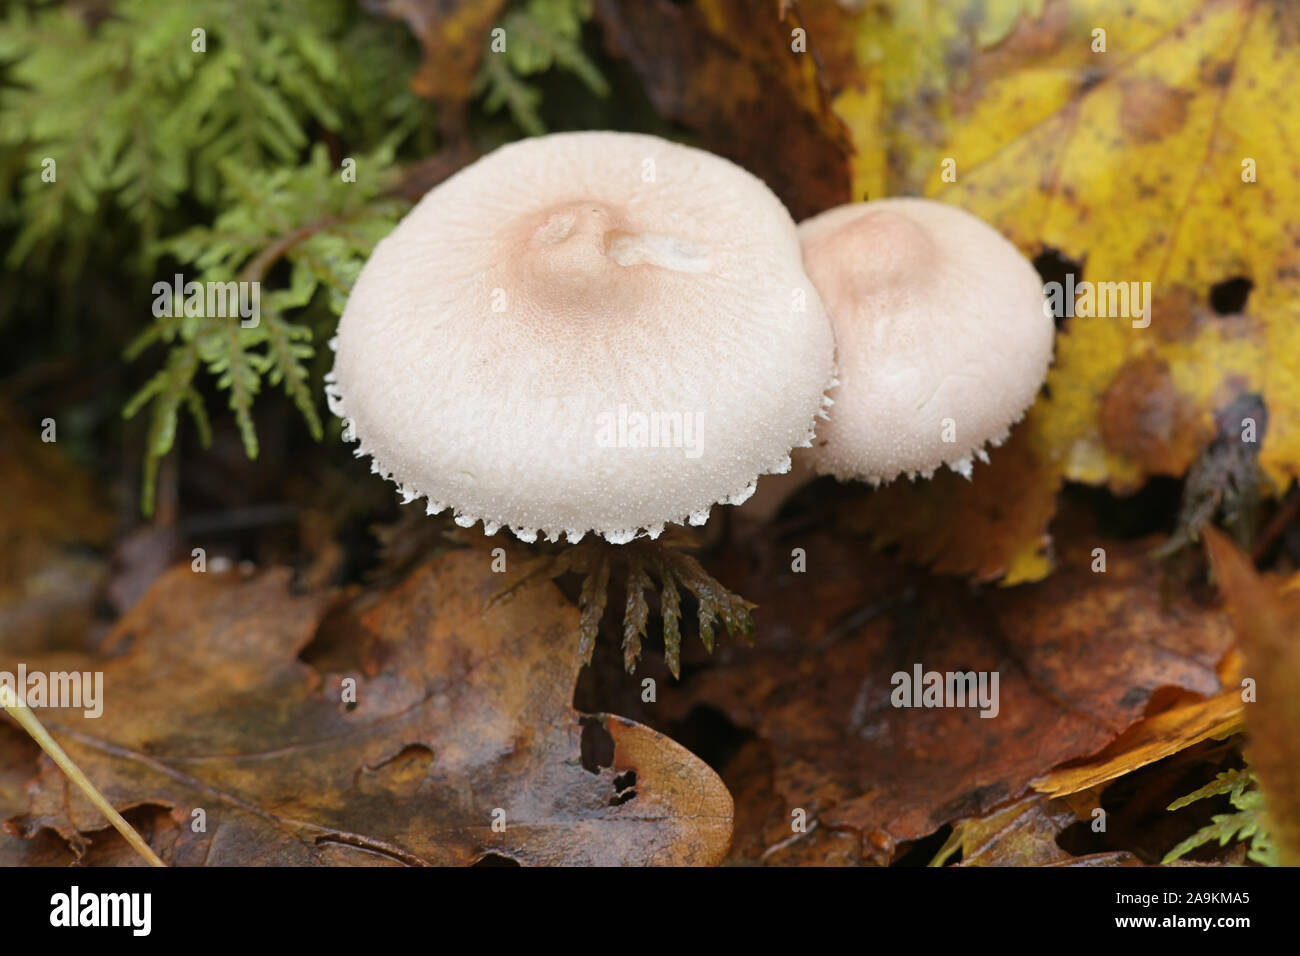 Cystoderma carcharias, wie Pearly Powdercap, wilde Pilze aus Finnland bekannt Stockfoto